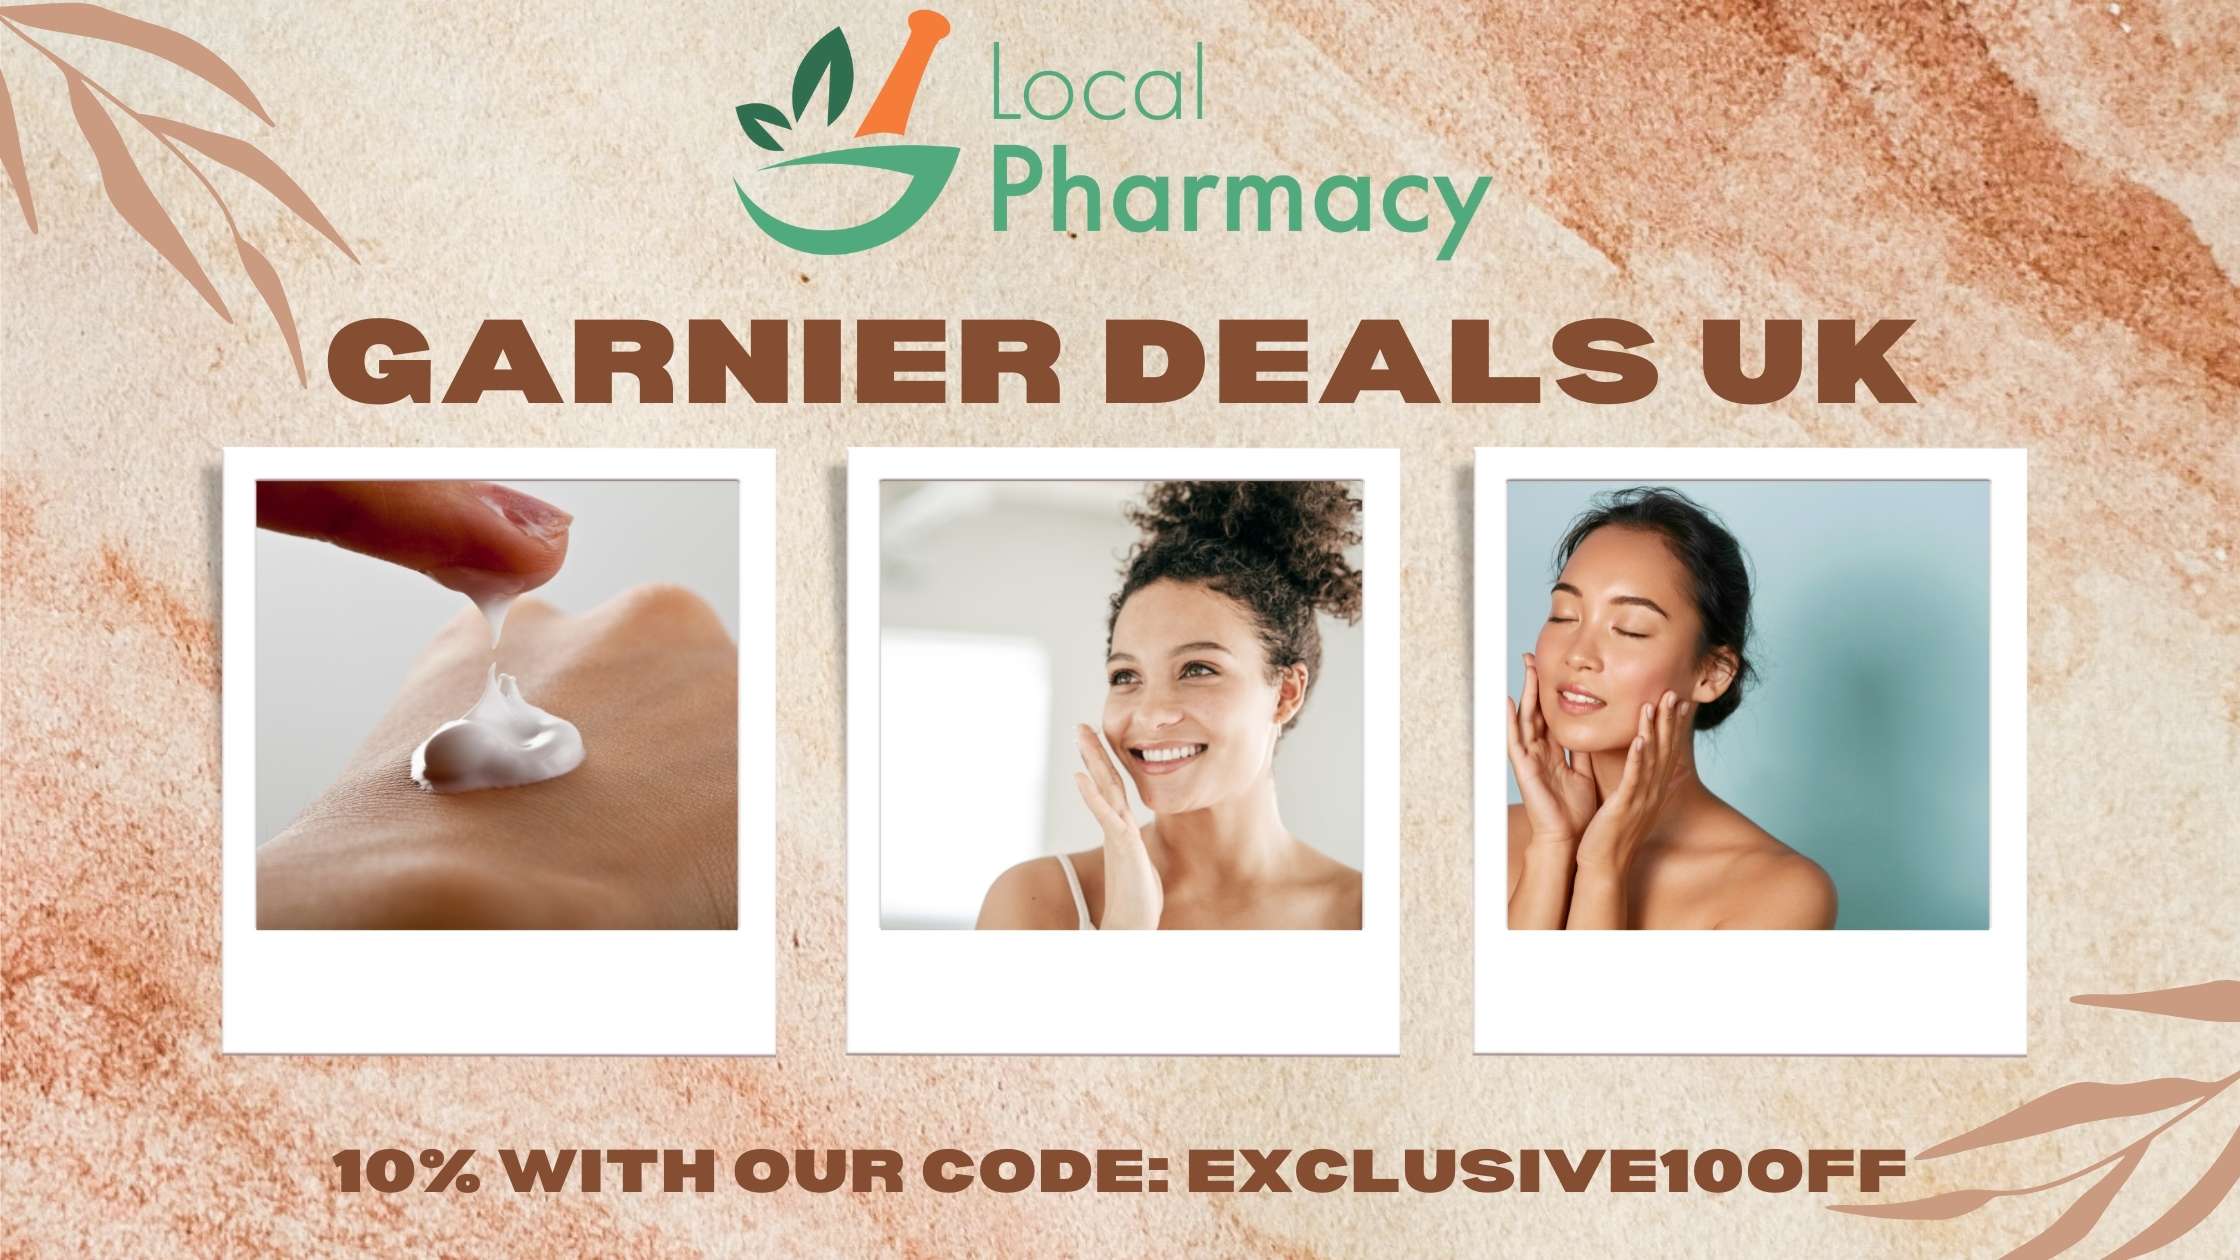 Garnier coupon code and deals uk